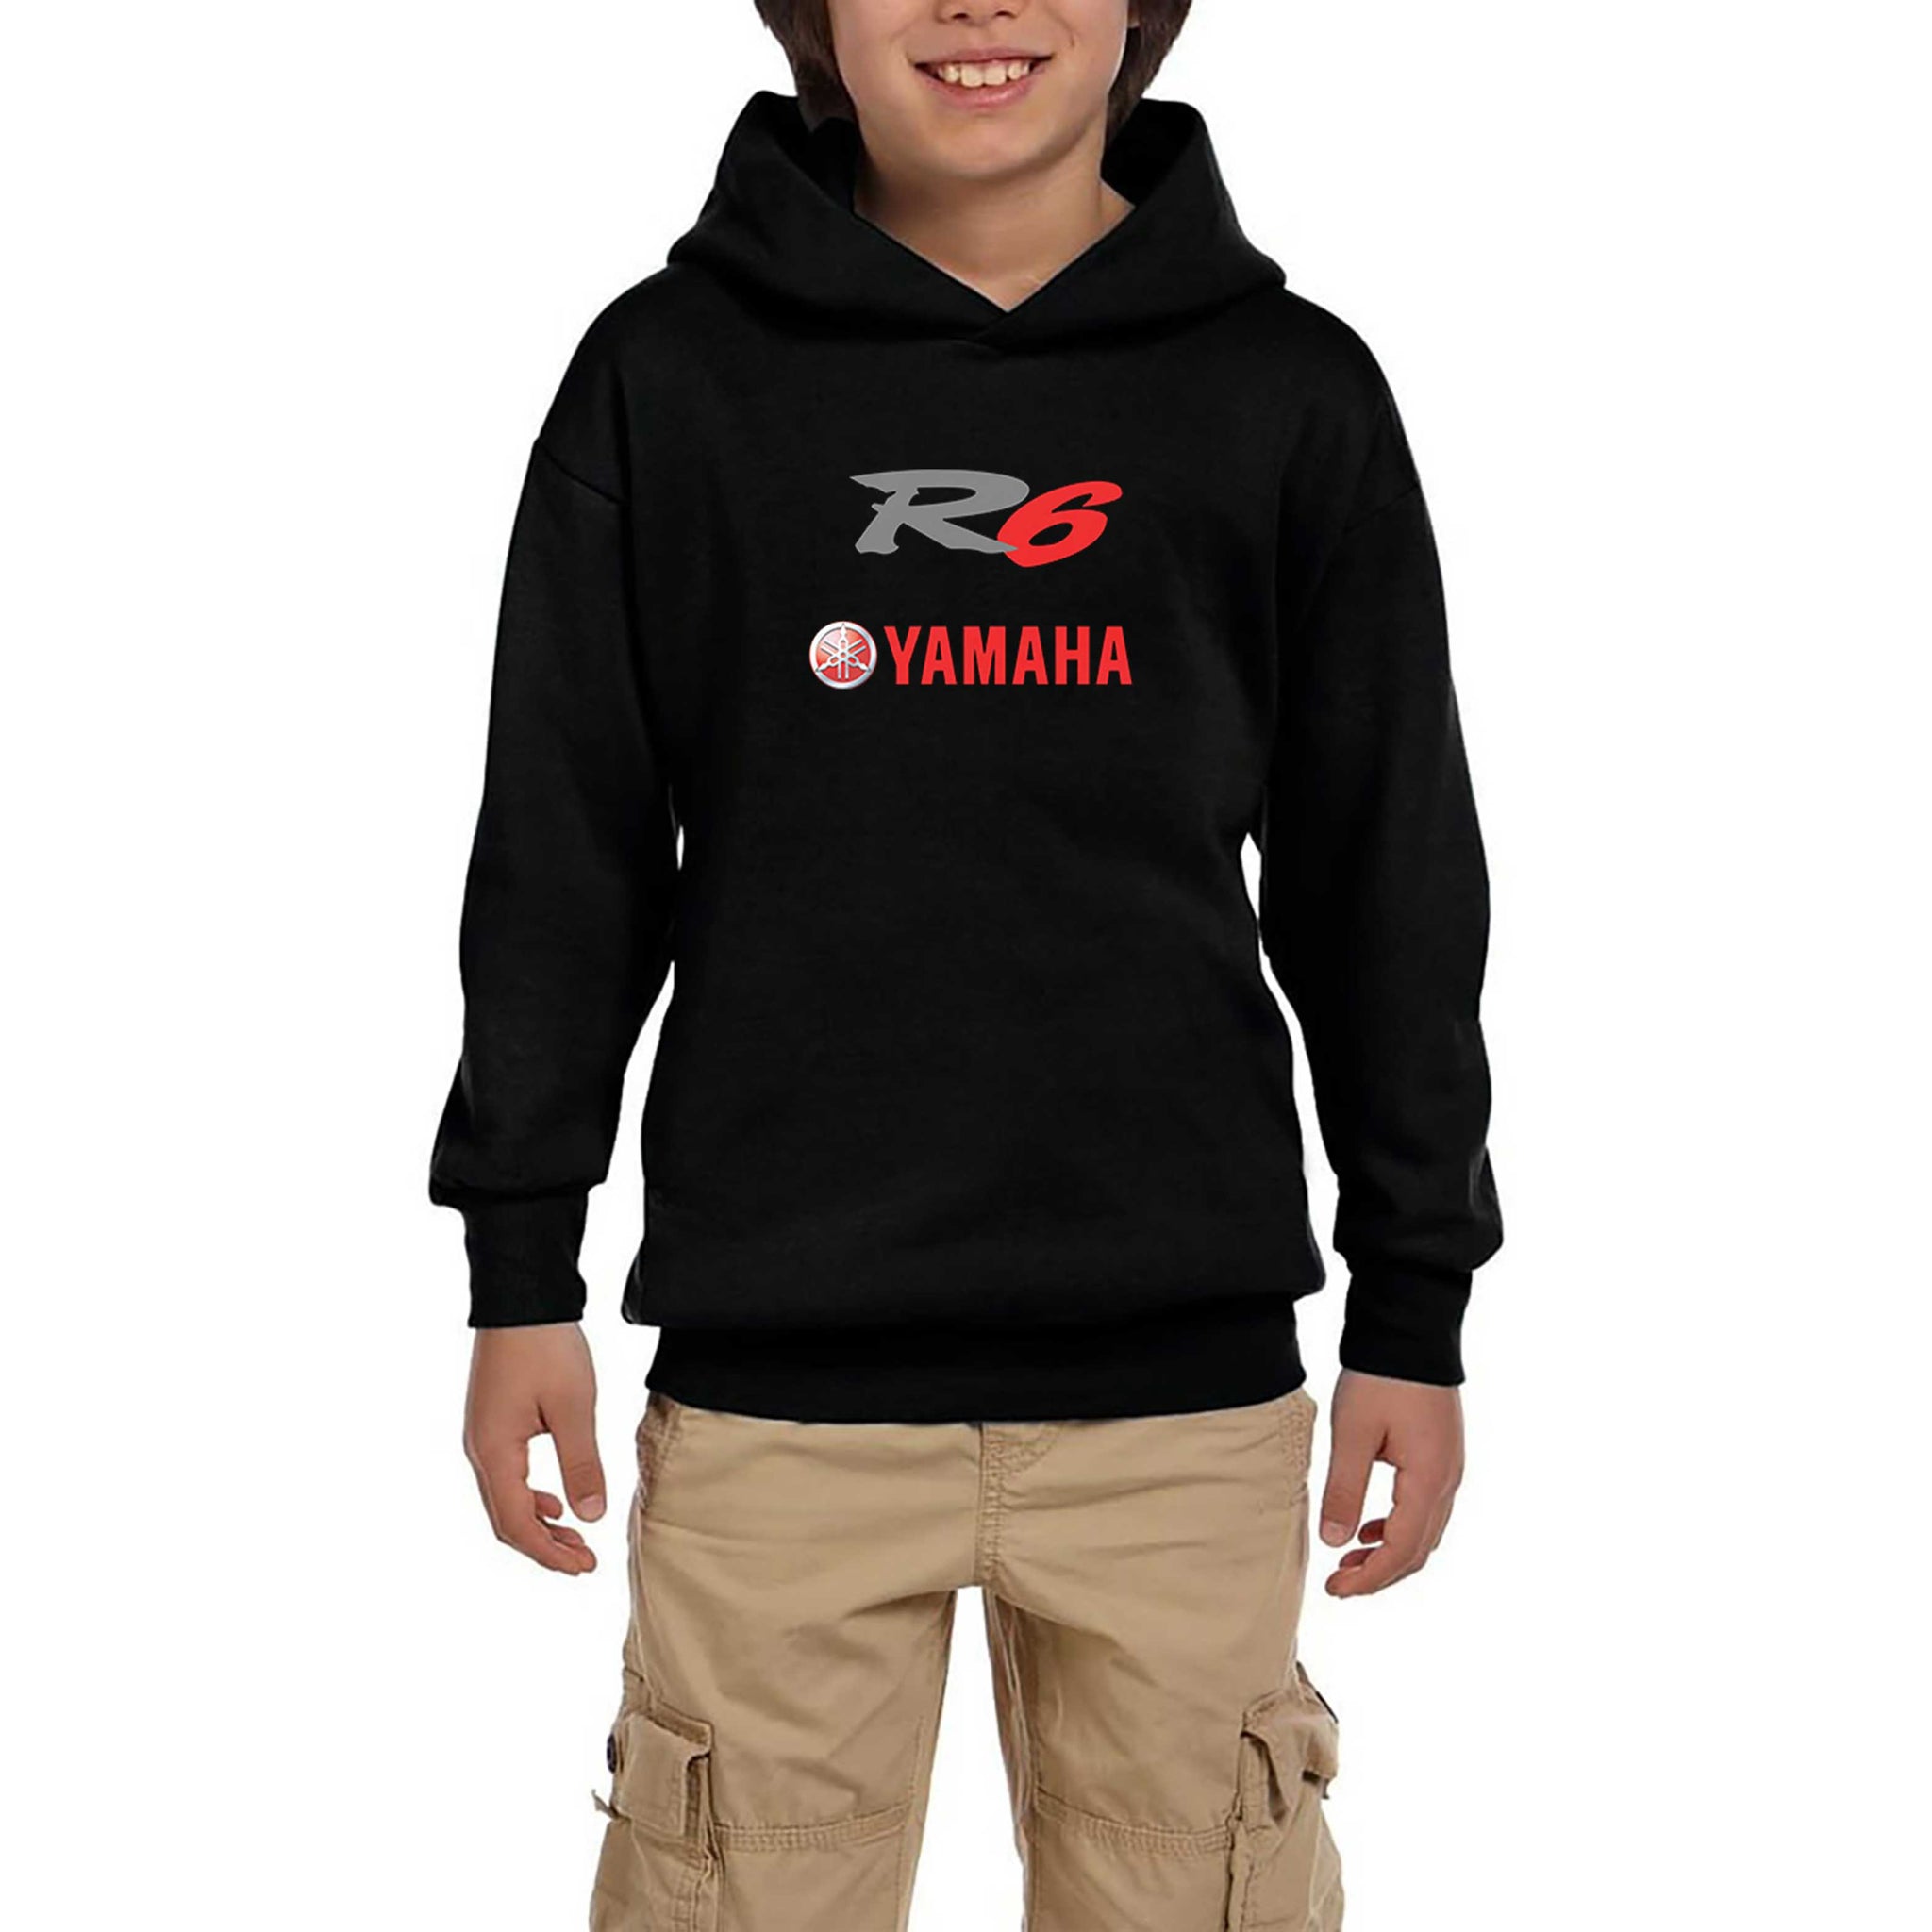 Yamaha R6 Red Siyah Çocuk Kapşonlu Sweatshirt